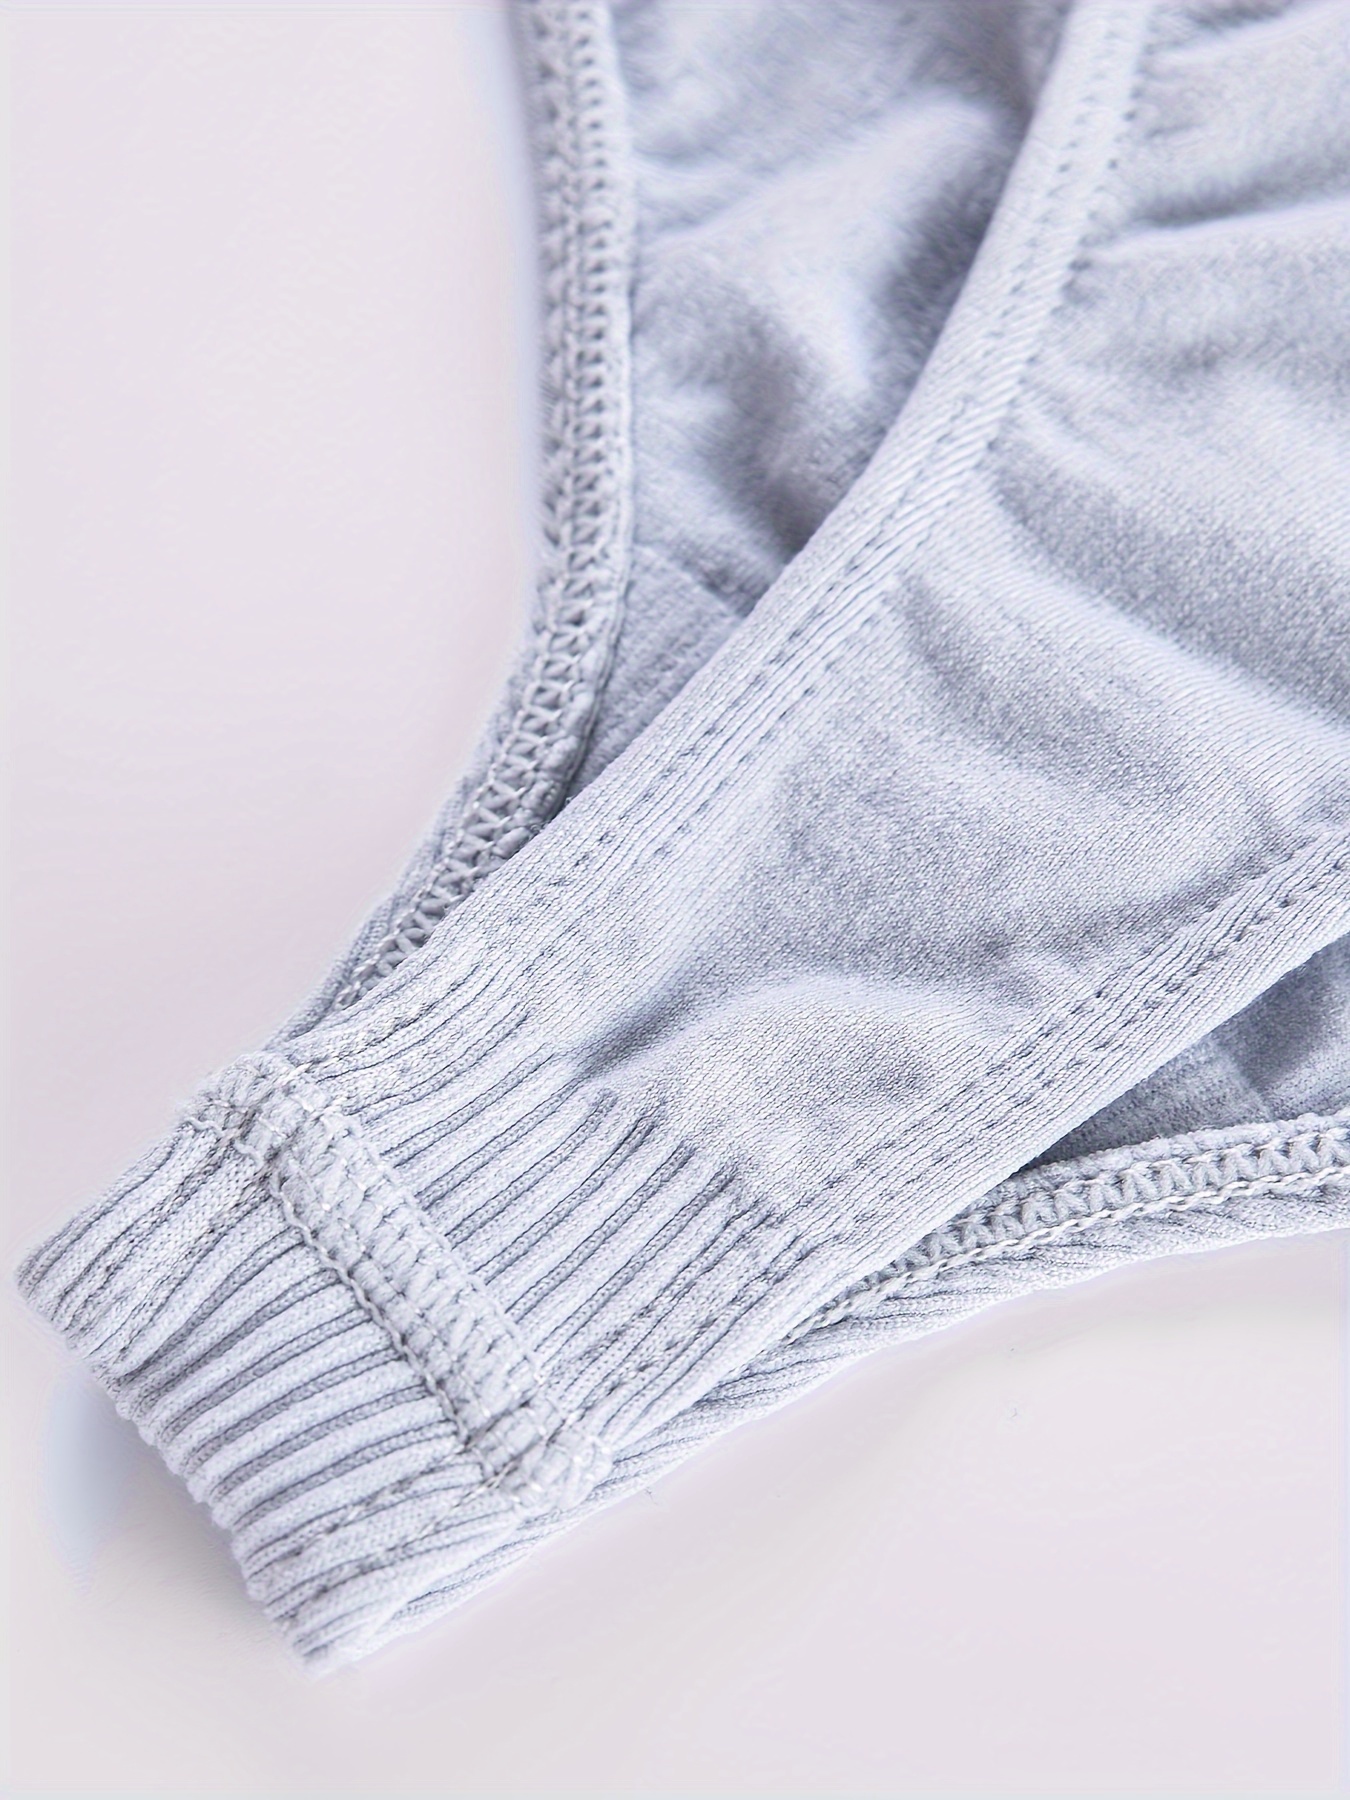 Women's Tummy Control Thong Shapewear, Comfortable Fabric, Steel